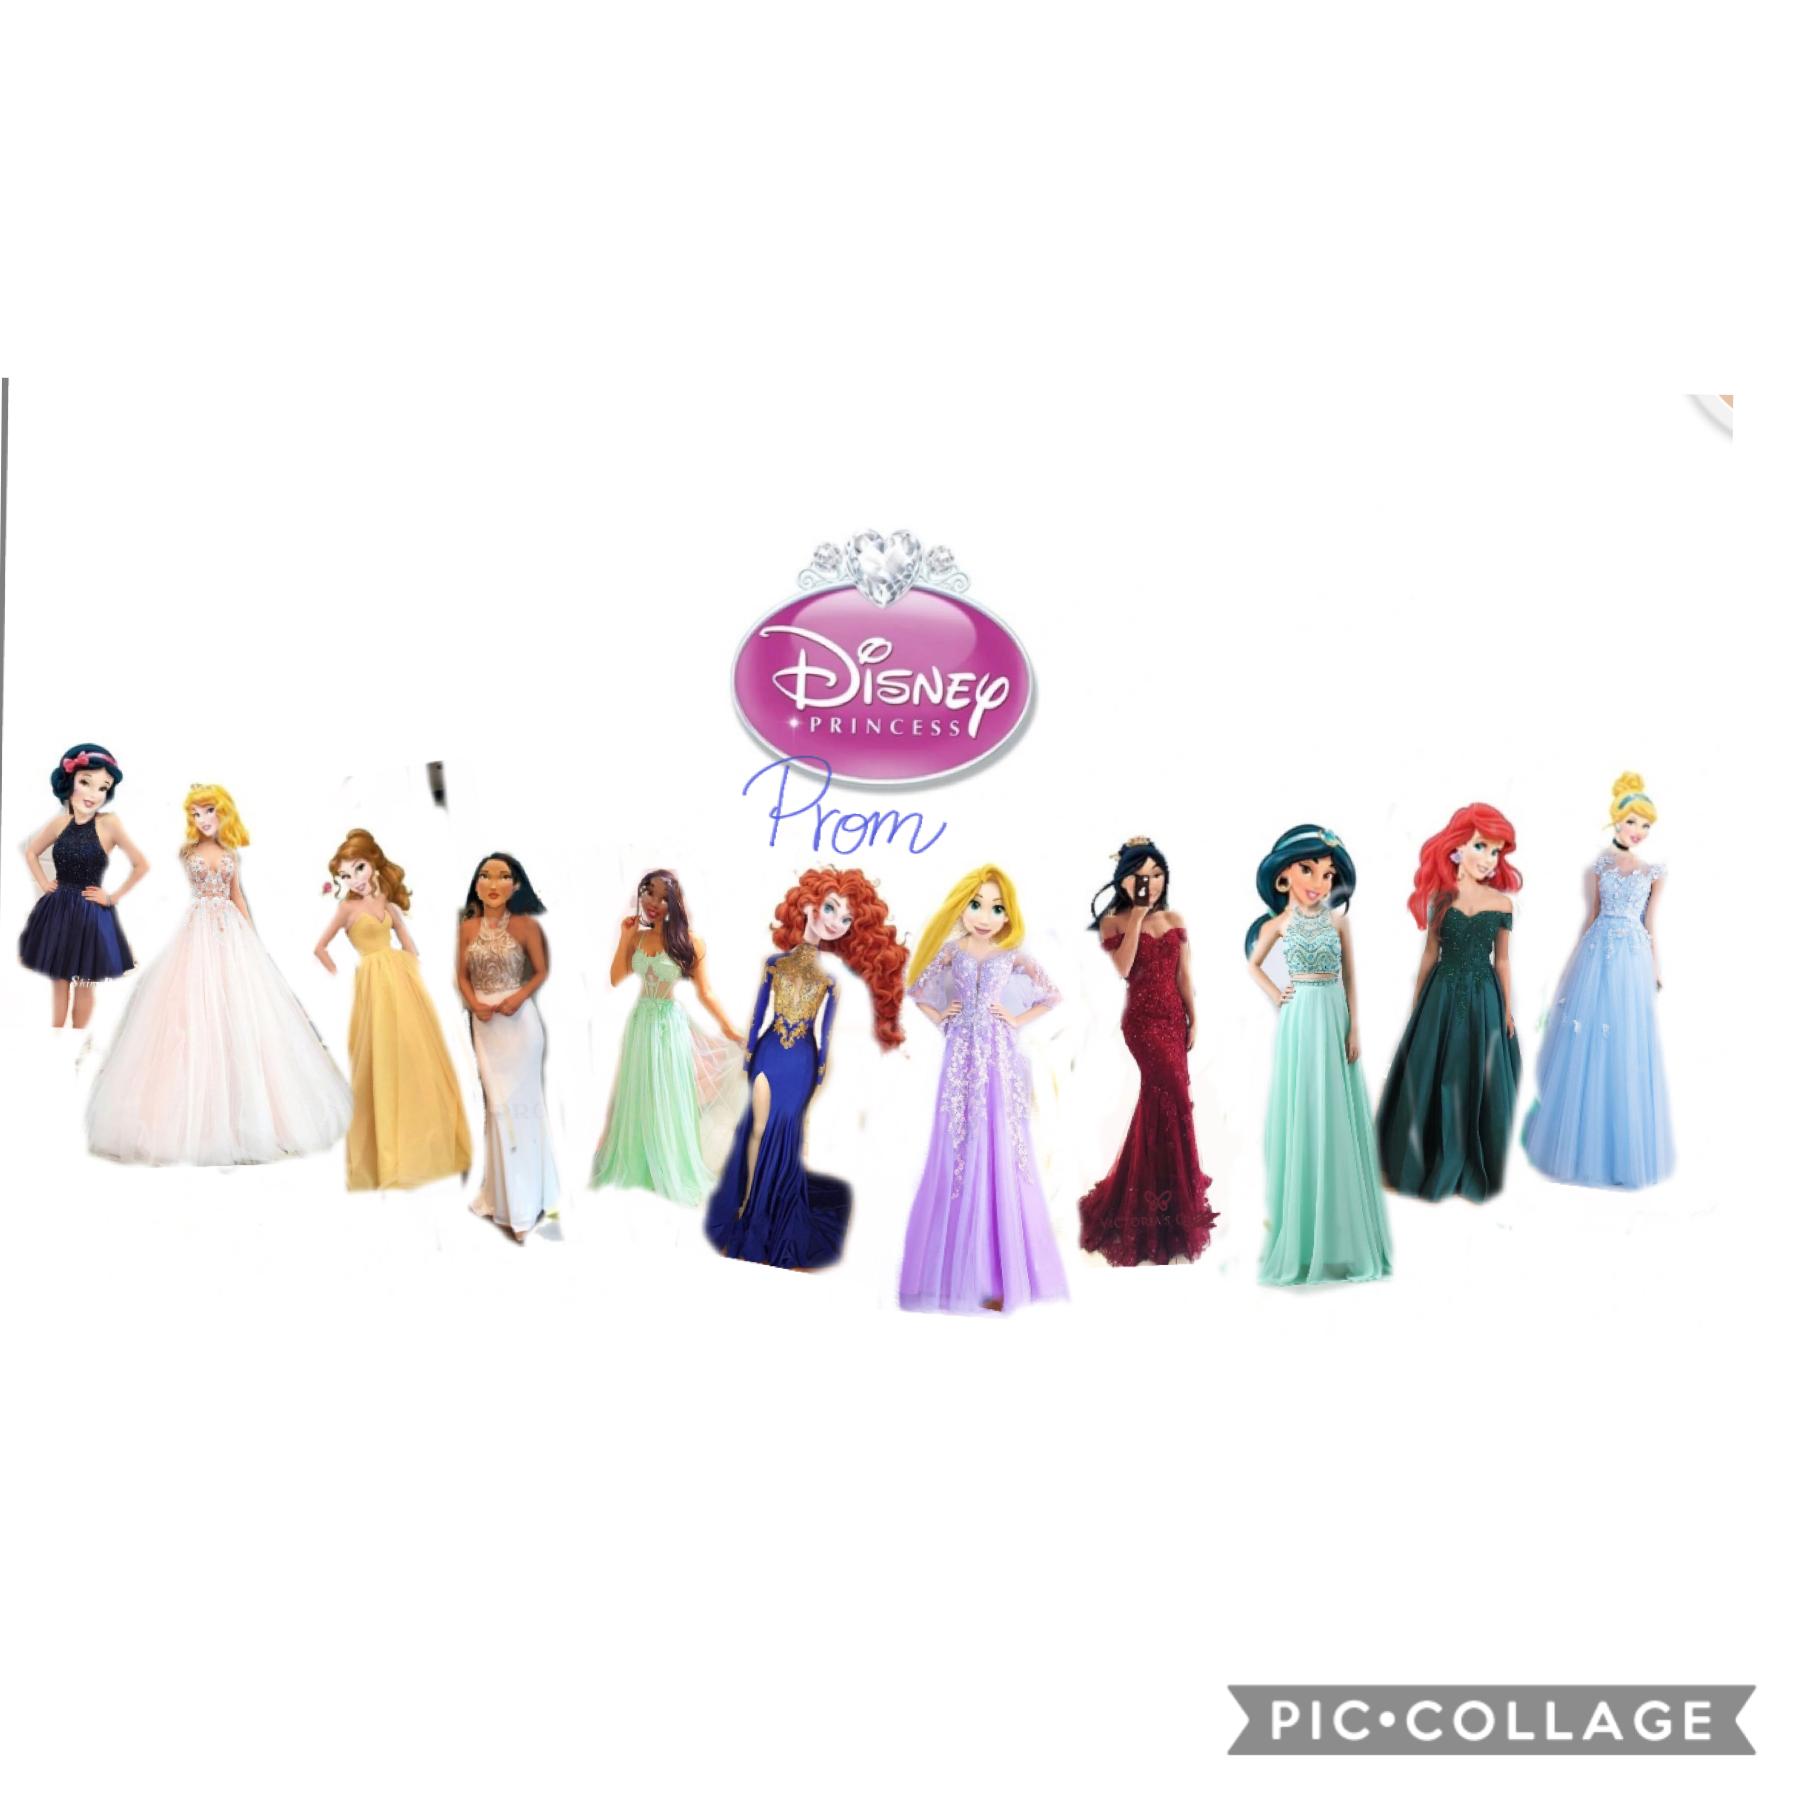 Disney princess prom